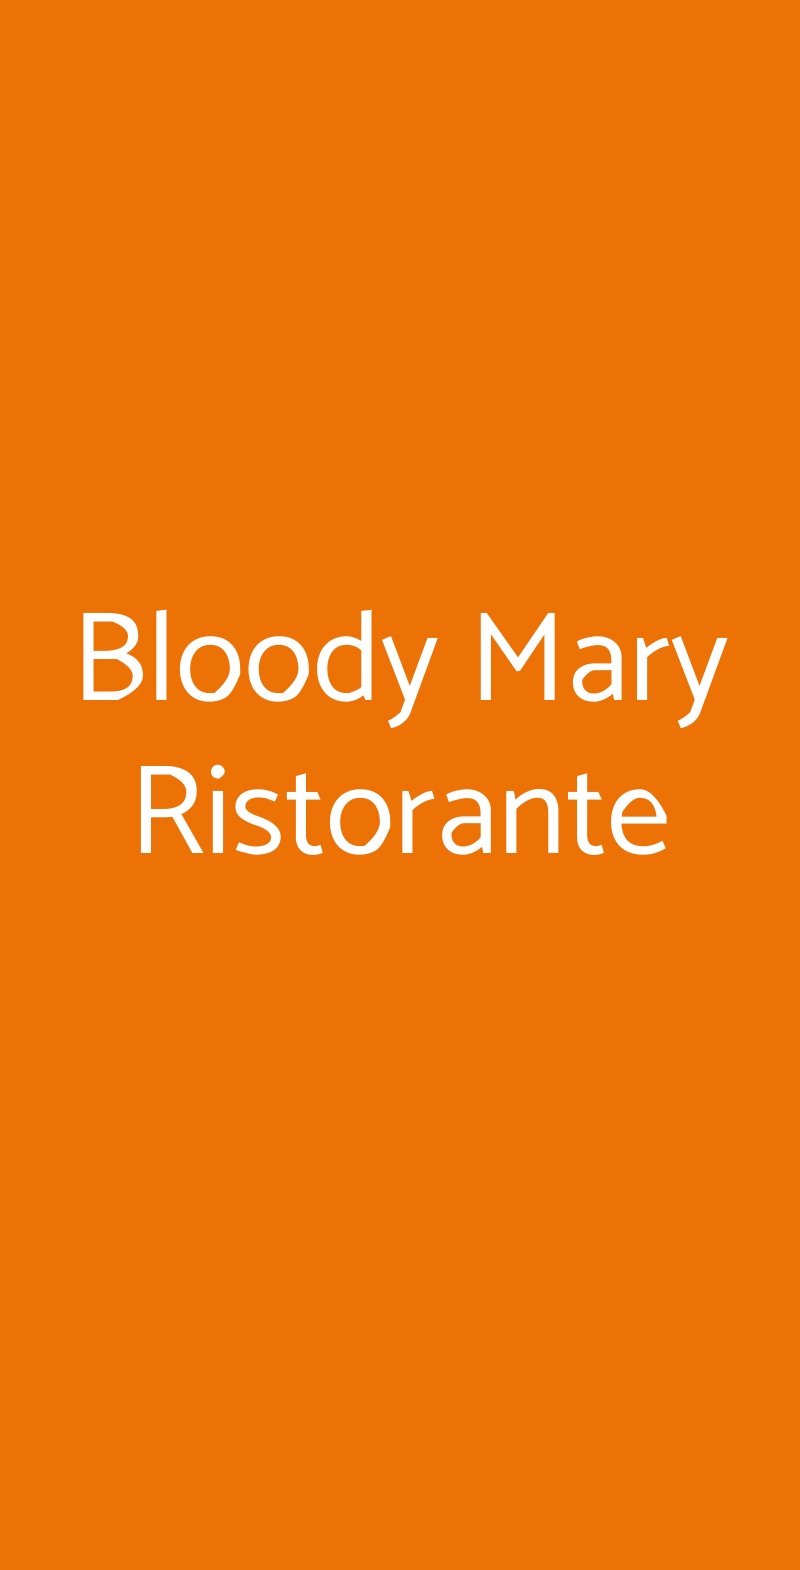 Bloody Mary Ristorante Milano menù 1 pagina